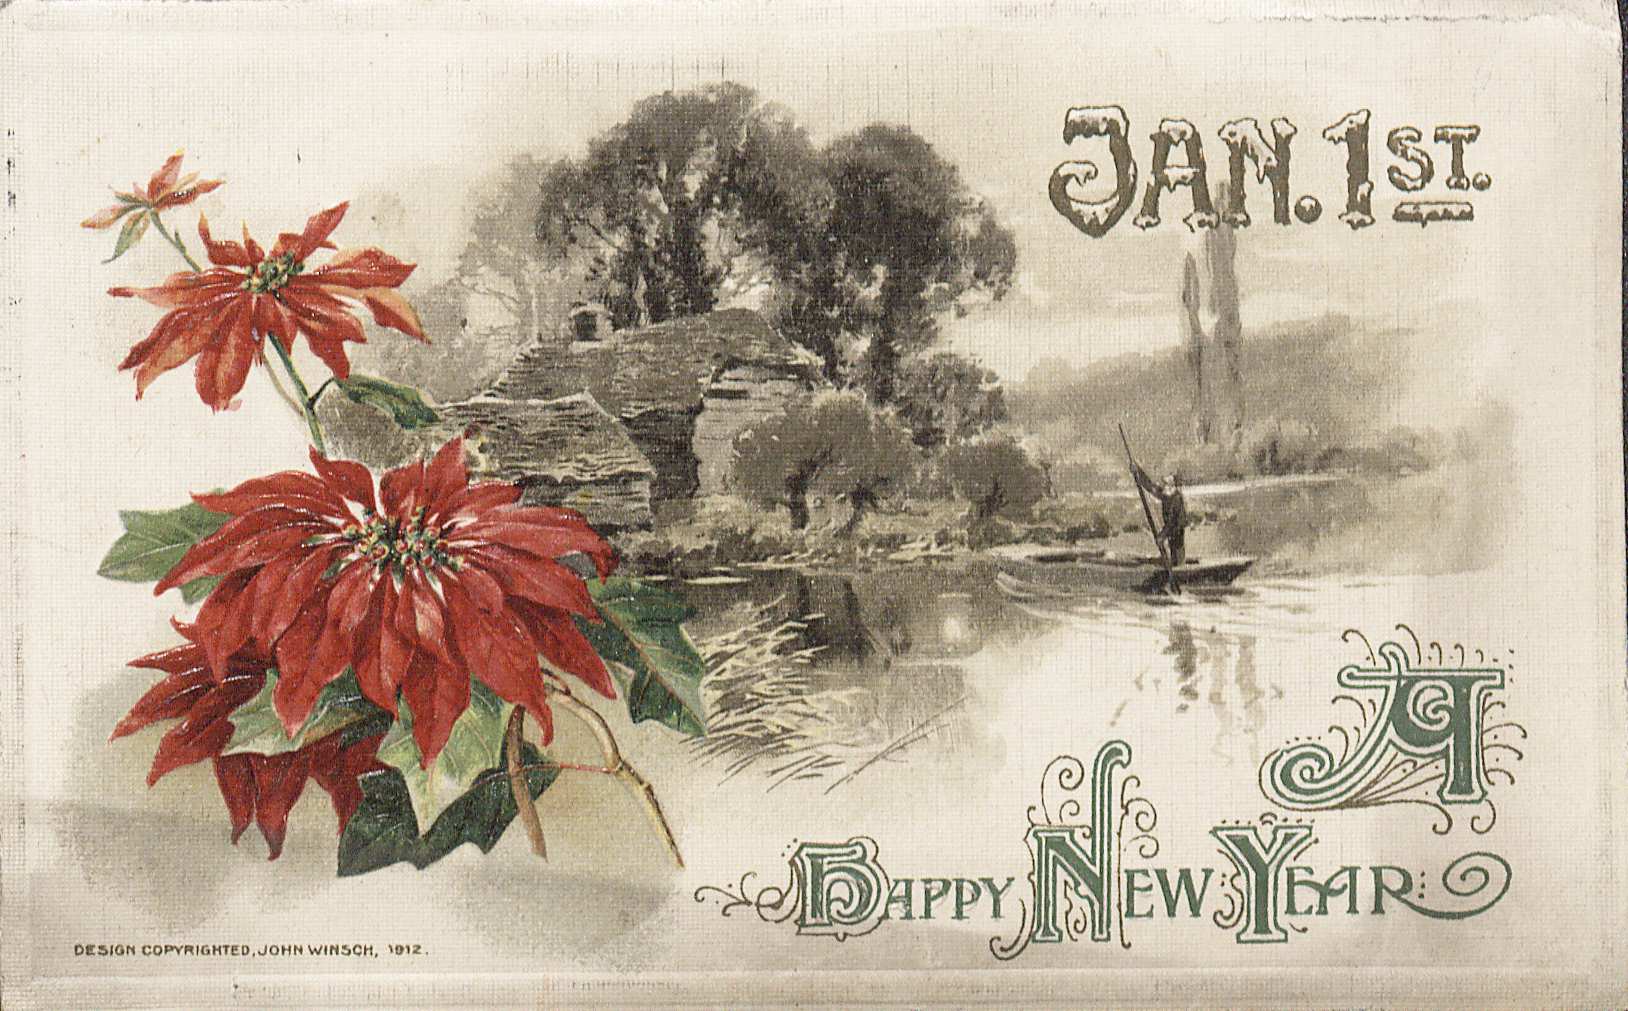 New Years postcard (Image by Petrina Jackson)